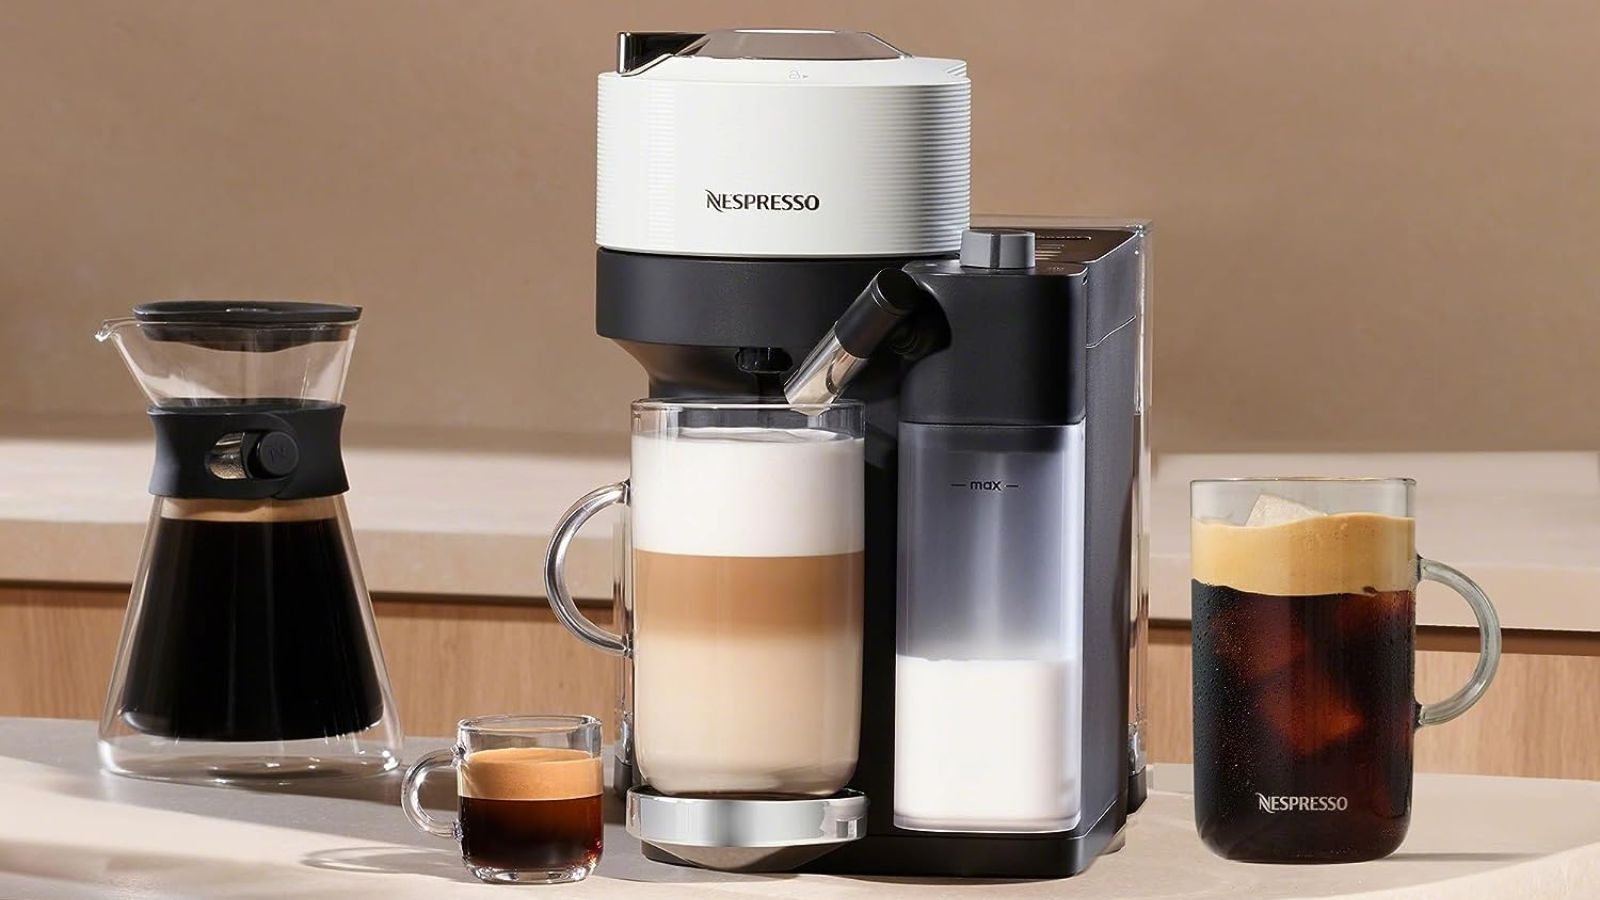 Nespresso Vertuo vs Vertuo Next: Which is Better? - BIT OF CREAM